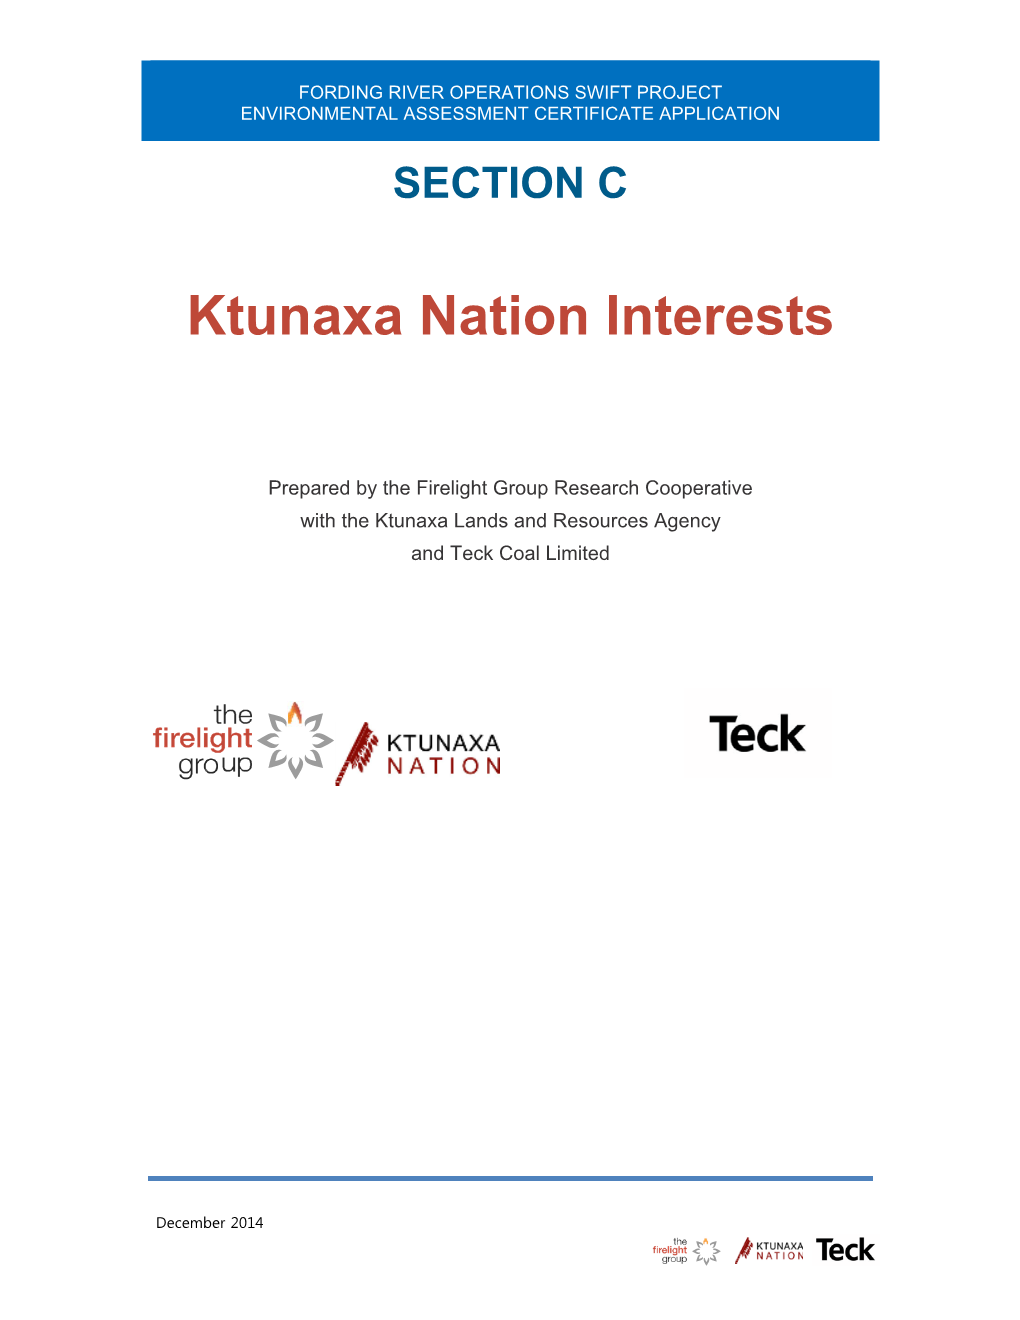 Ktunaxa Nation Interests